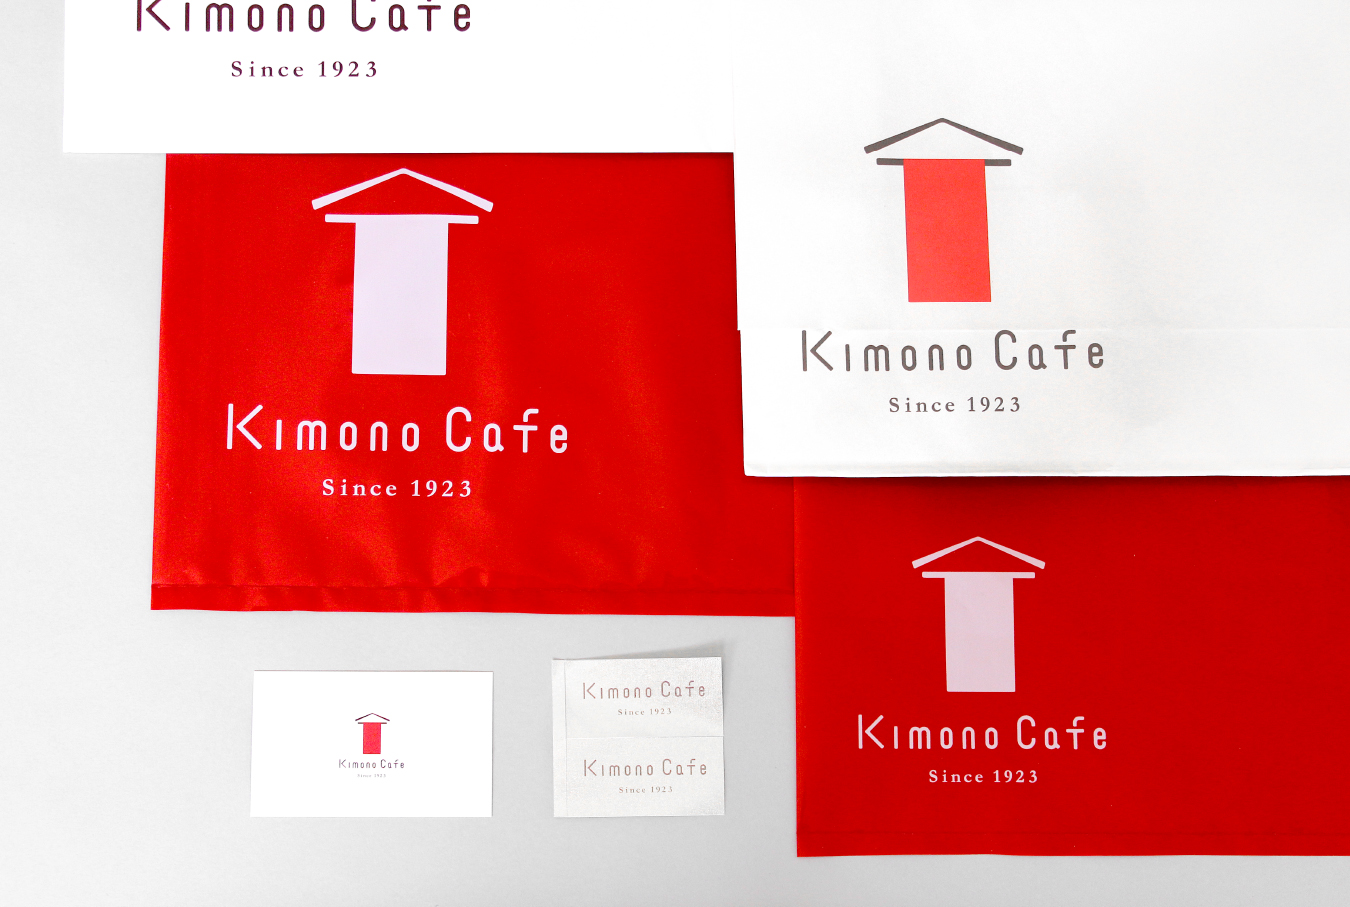 kimono cafe 画像